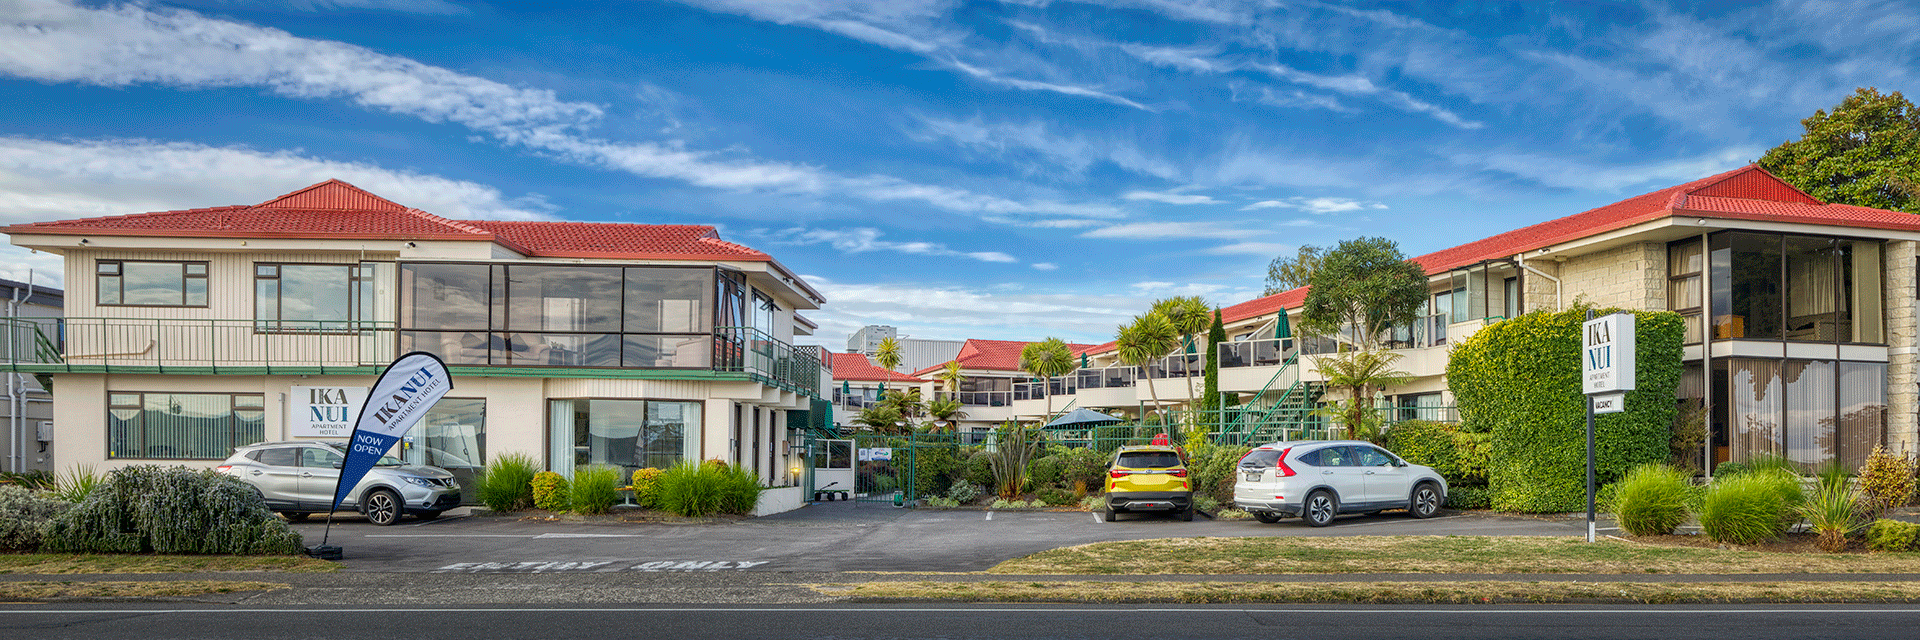 Road view Ika Nui Motel